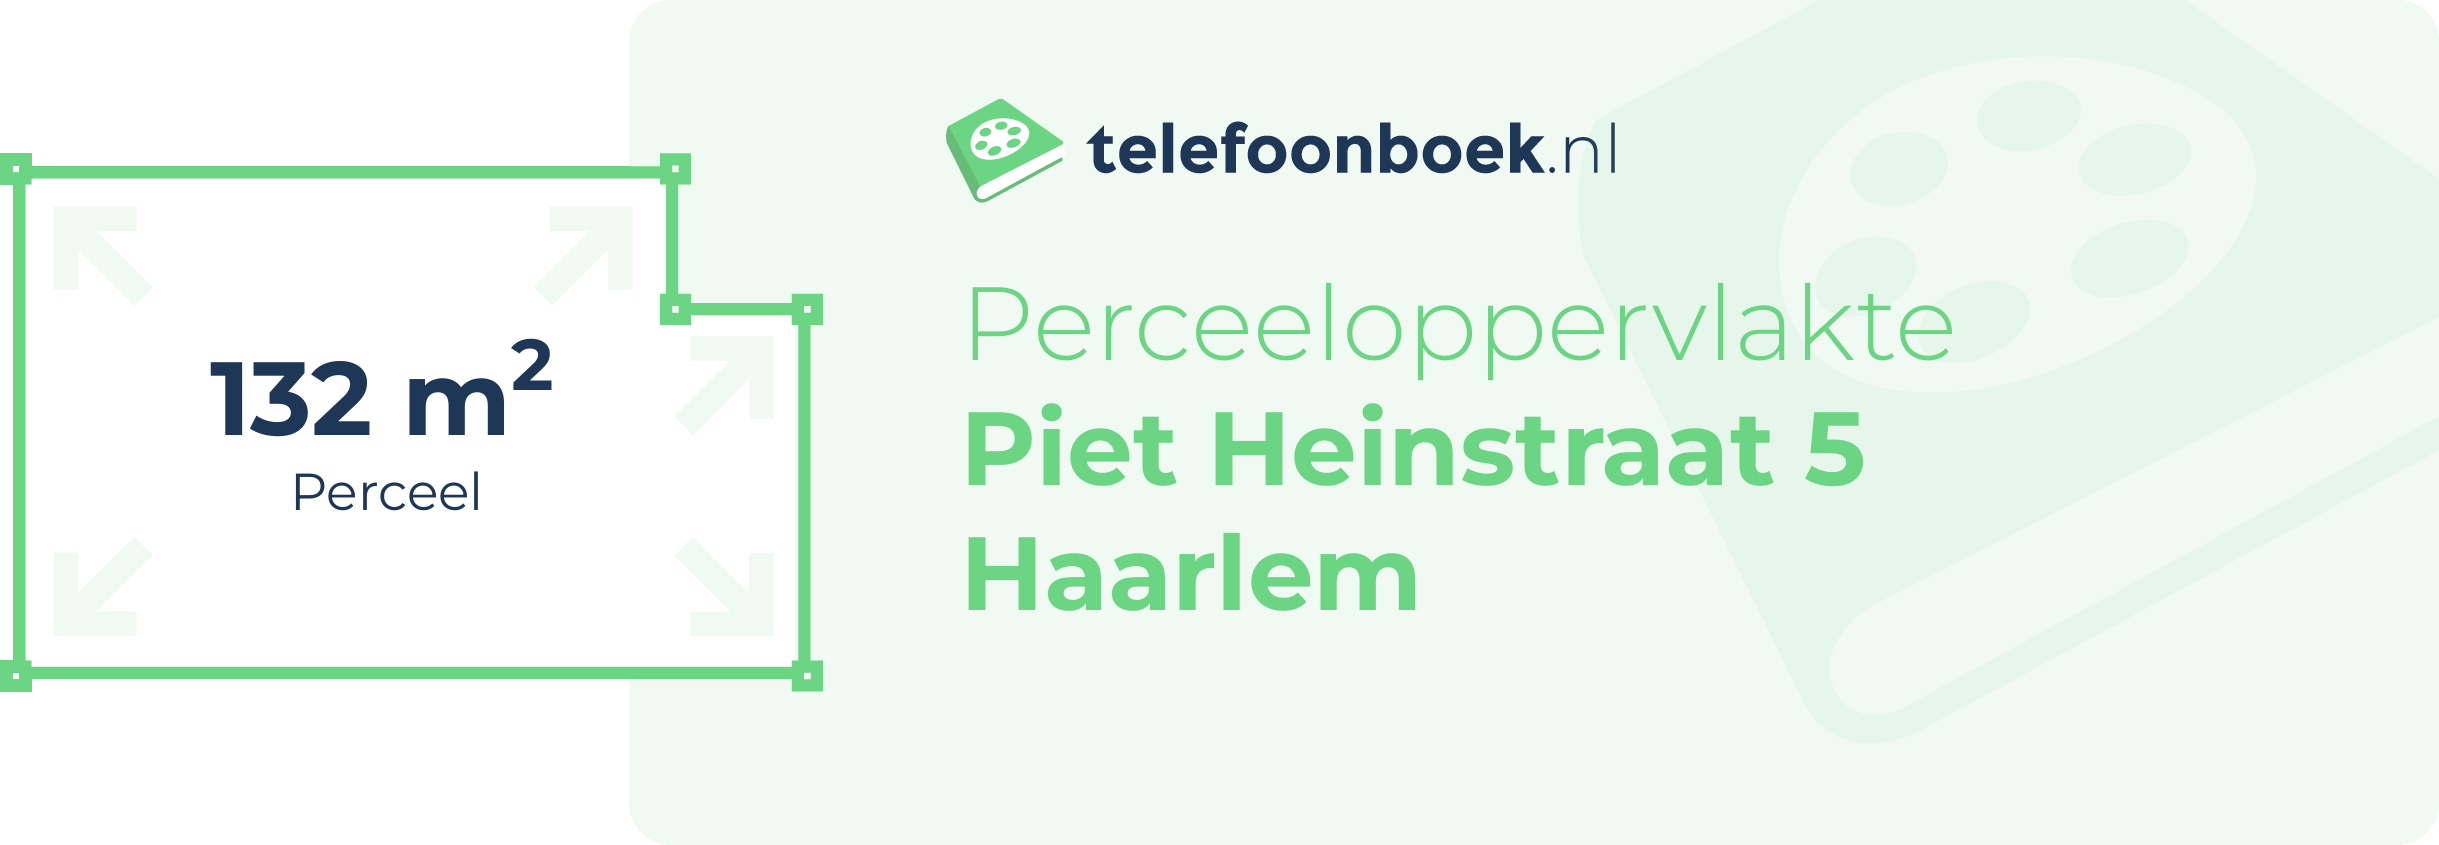 Perceeloppervlakte Piet Heinstraat 5 Haarlem